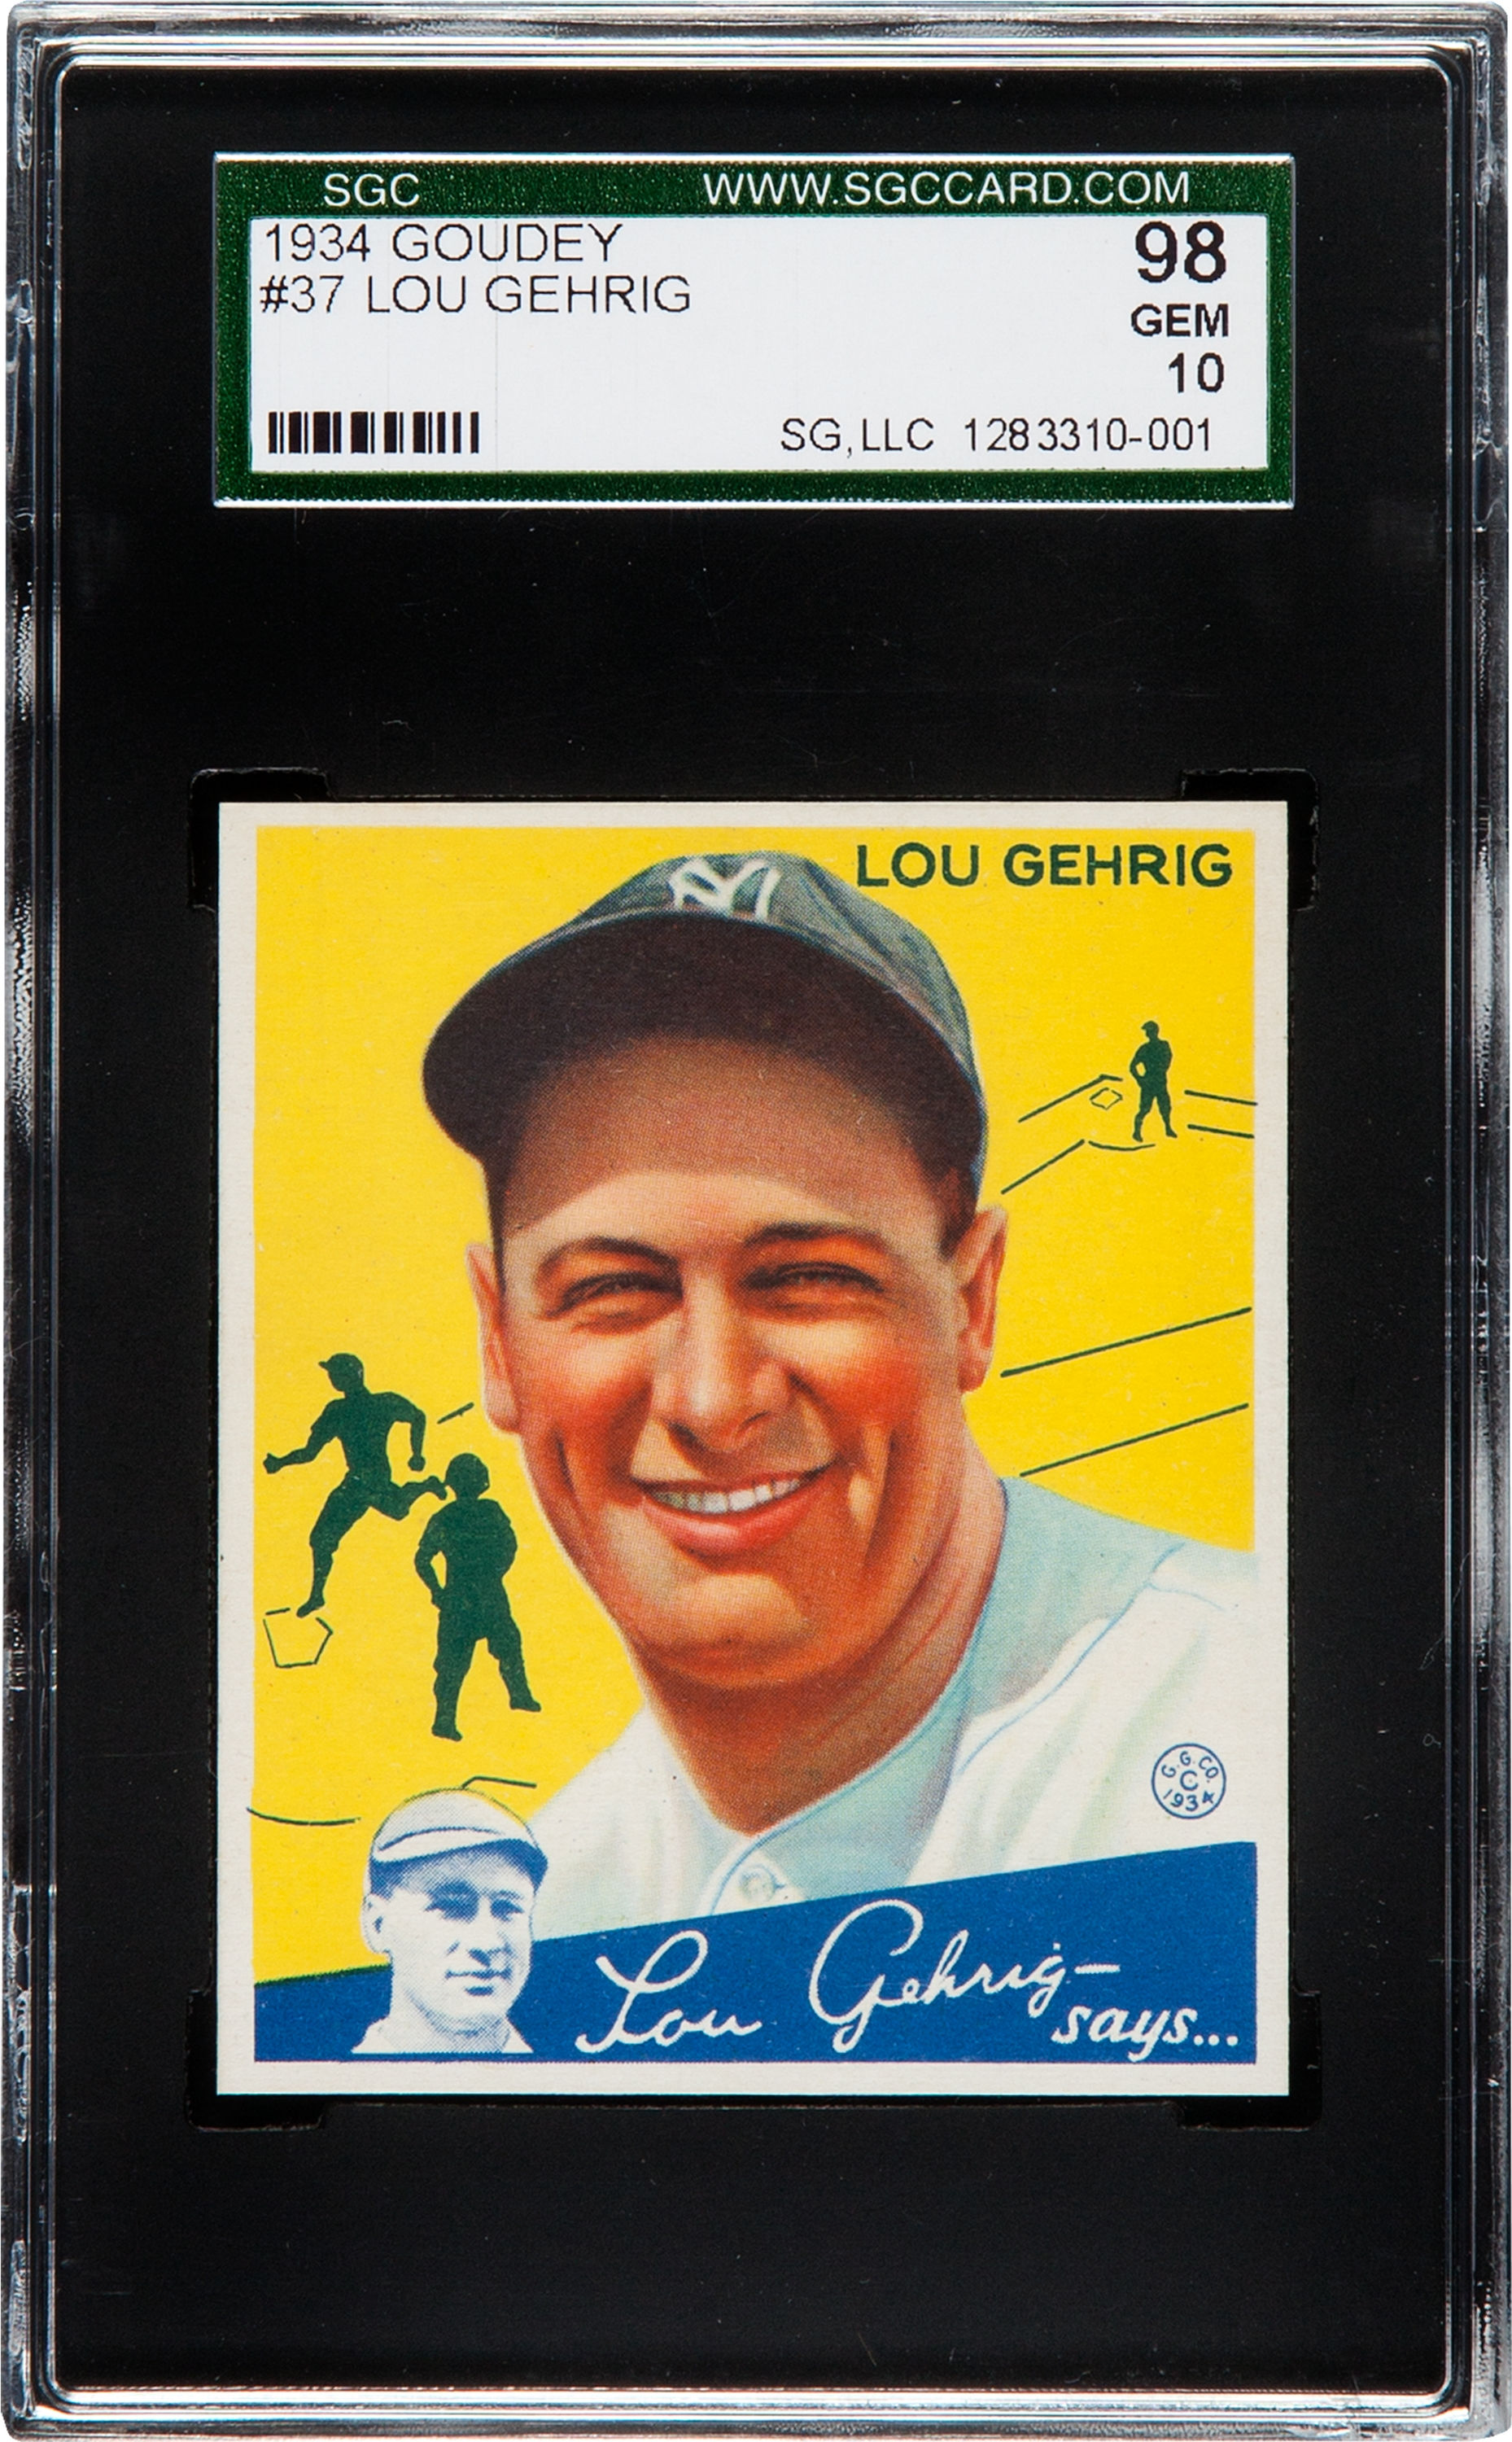 1934 Goudey Lou Gehrig #37 SGC 98 Gem 10